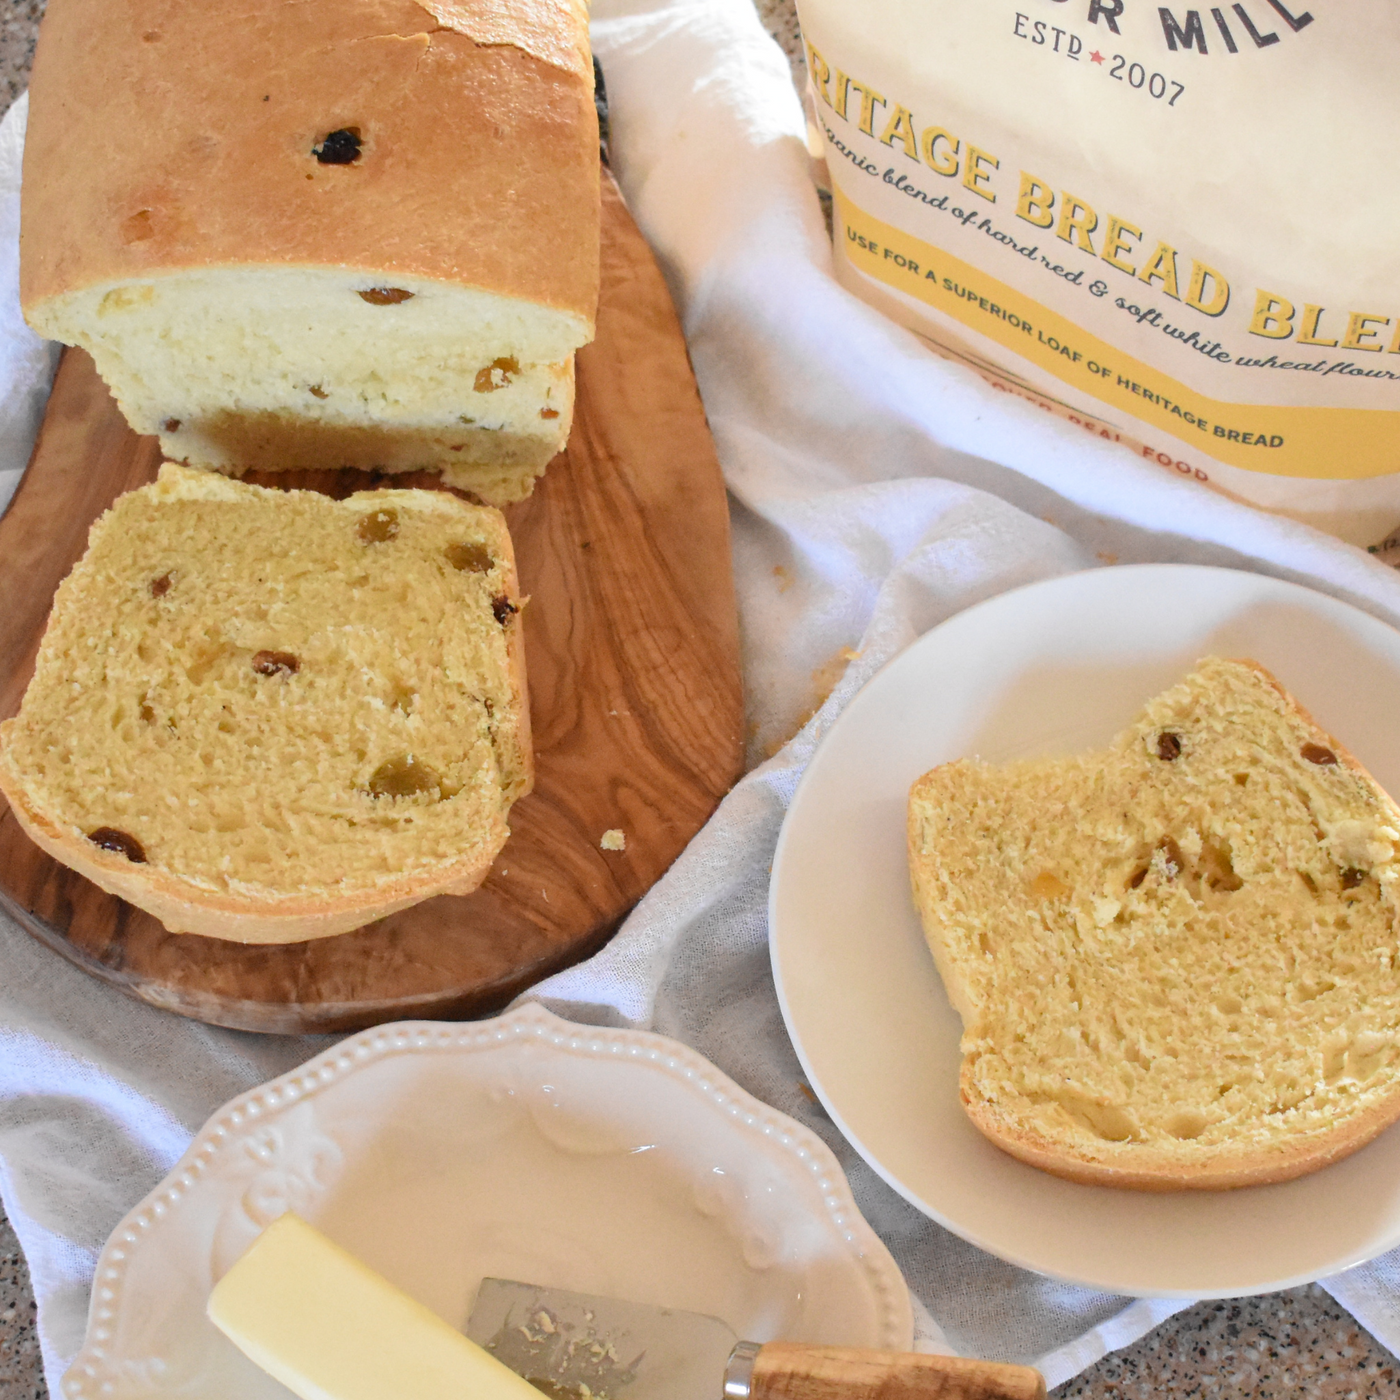 Raisin bread next to a bag or bread blend